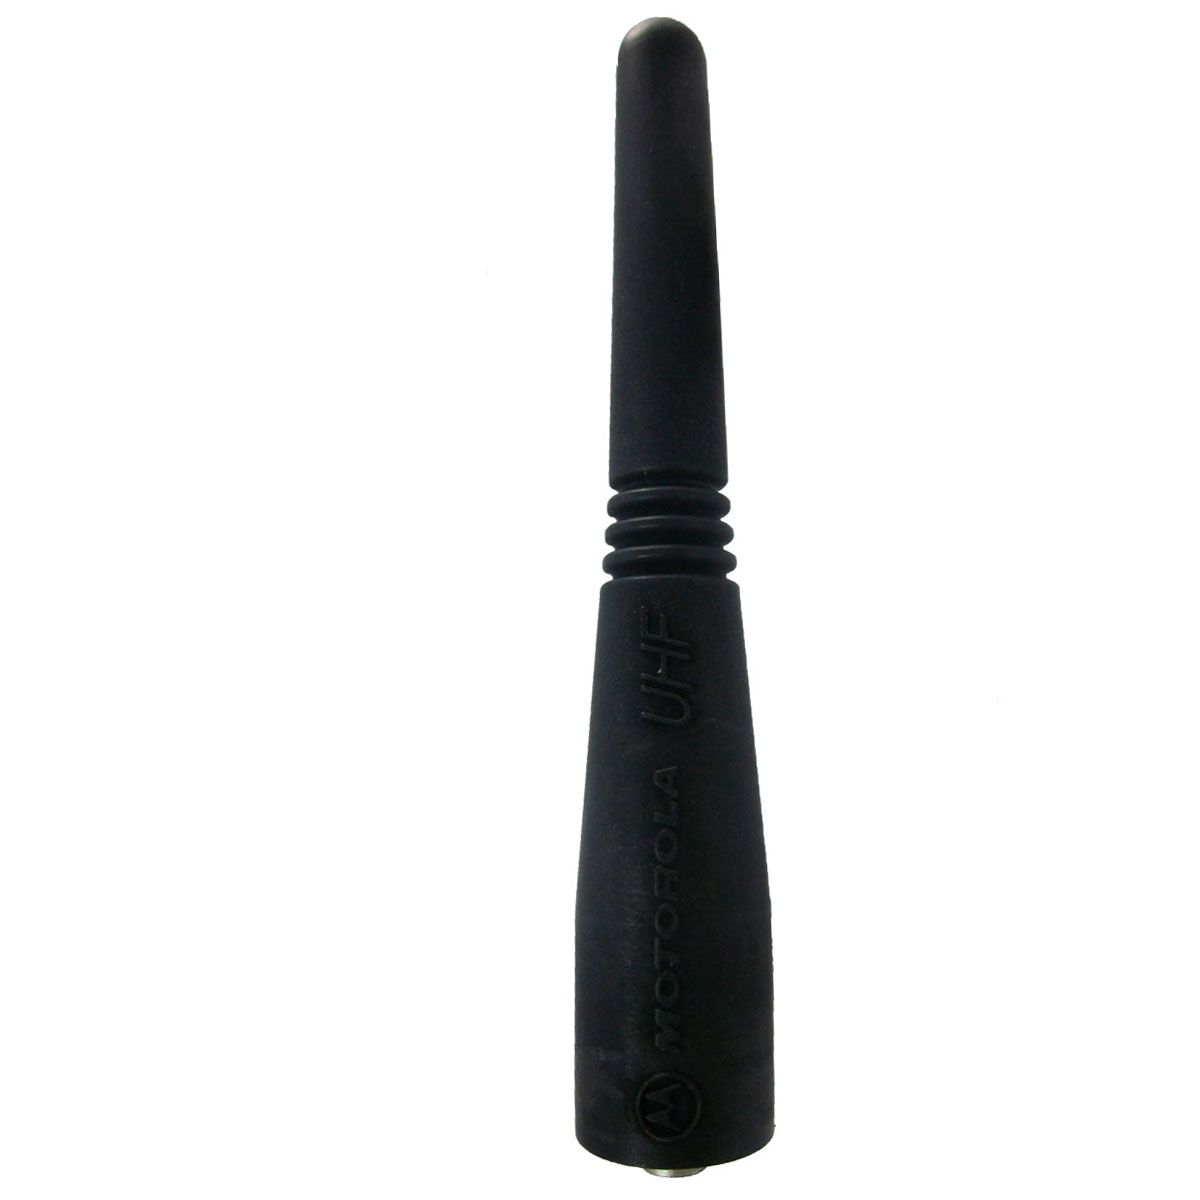 Antena Motorola para radio DEP450 UHF tipo stubby PMAE4006A